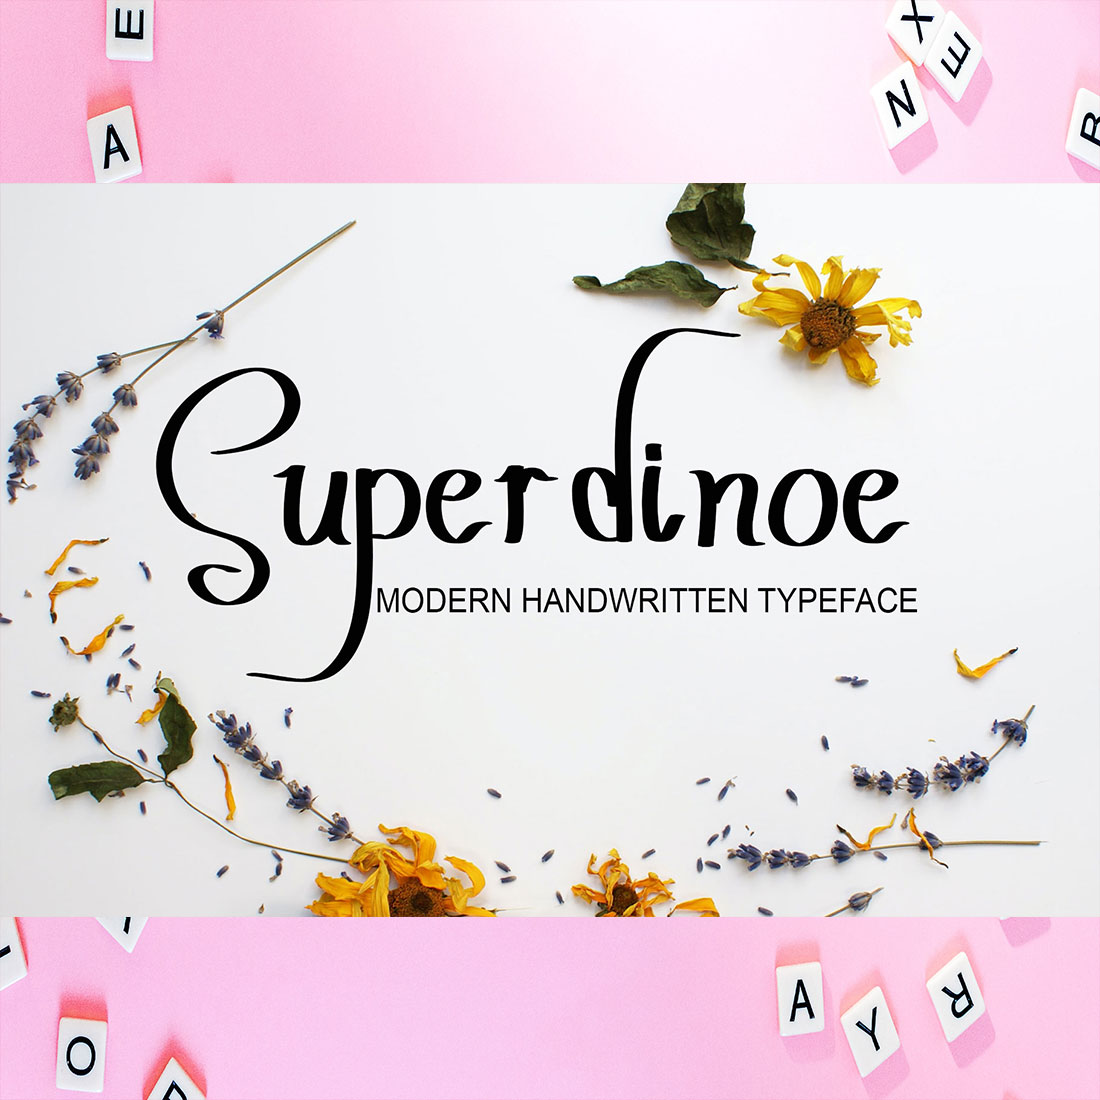 Cover of charming Super Dinoe font.